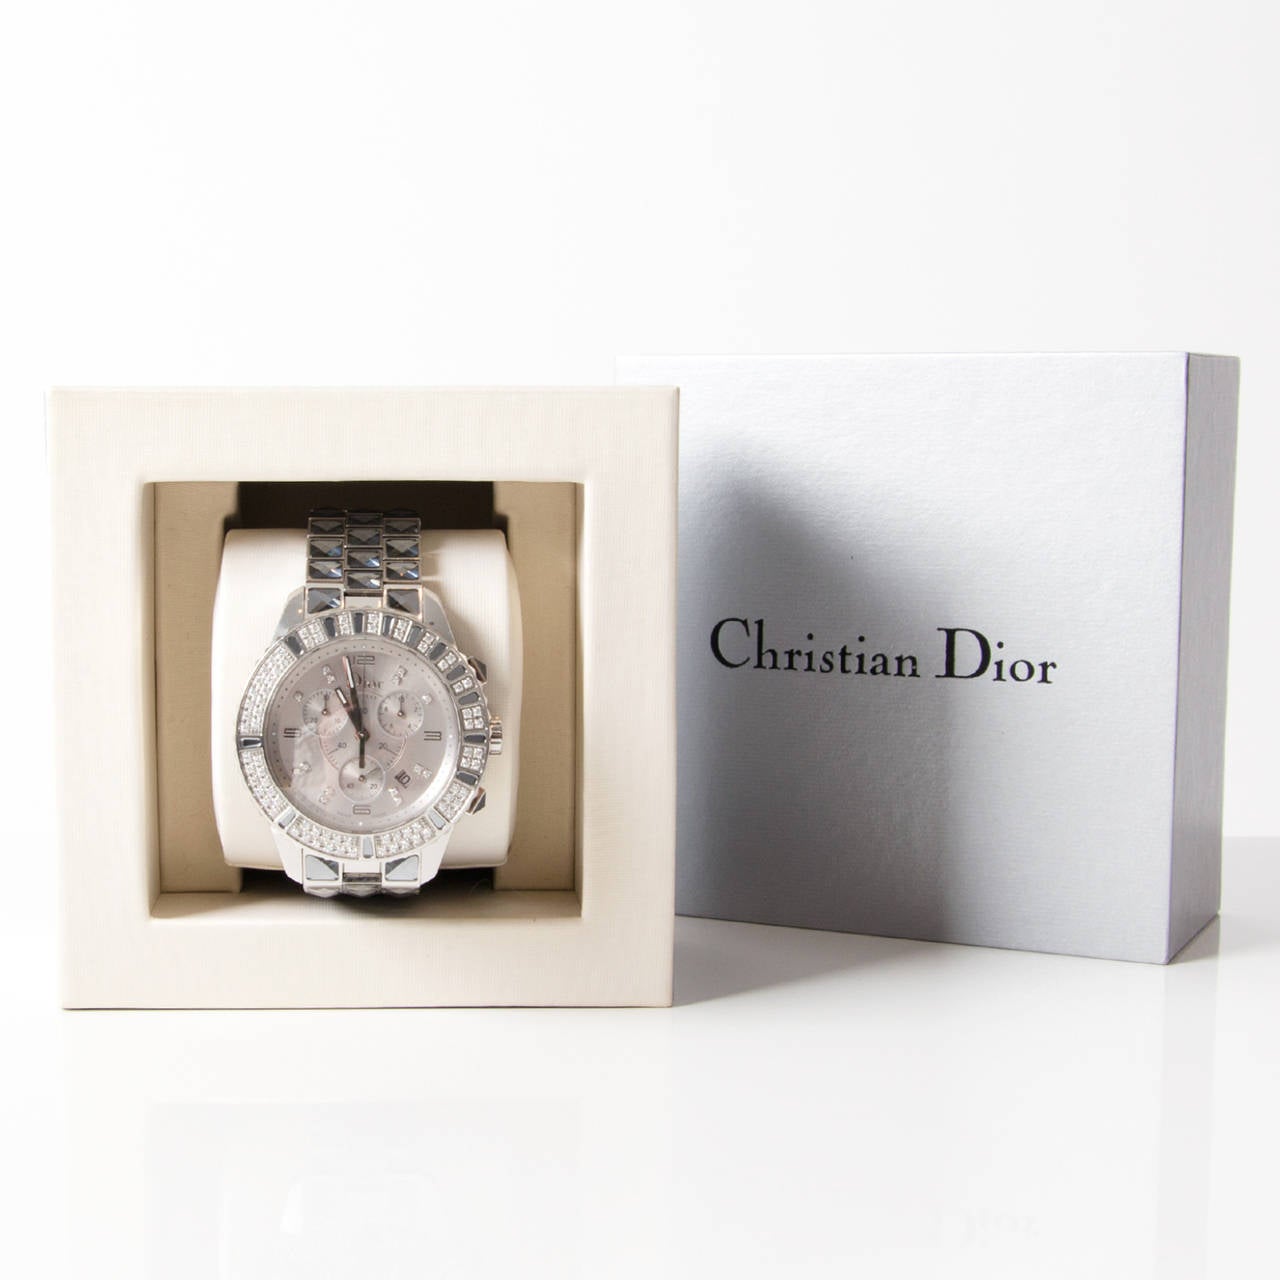 Christian Dior Ladies Watch
Dior Christal CD114318M001
Stainless Steel Bezel</p>
Diamonds, Grey Sapphire Scratch Resistant Sapphire Crystal Steel case Quartz
Water resistant depth: 50